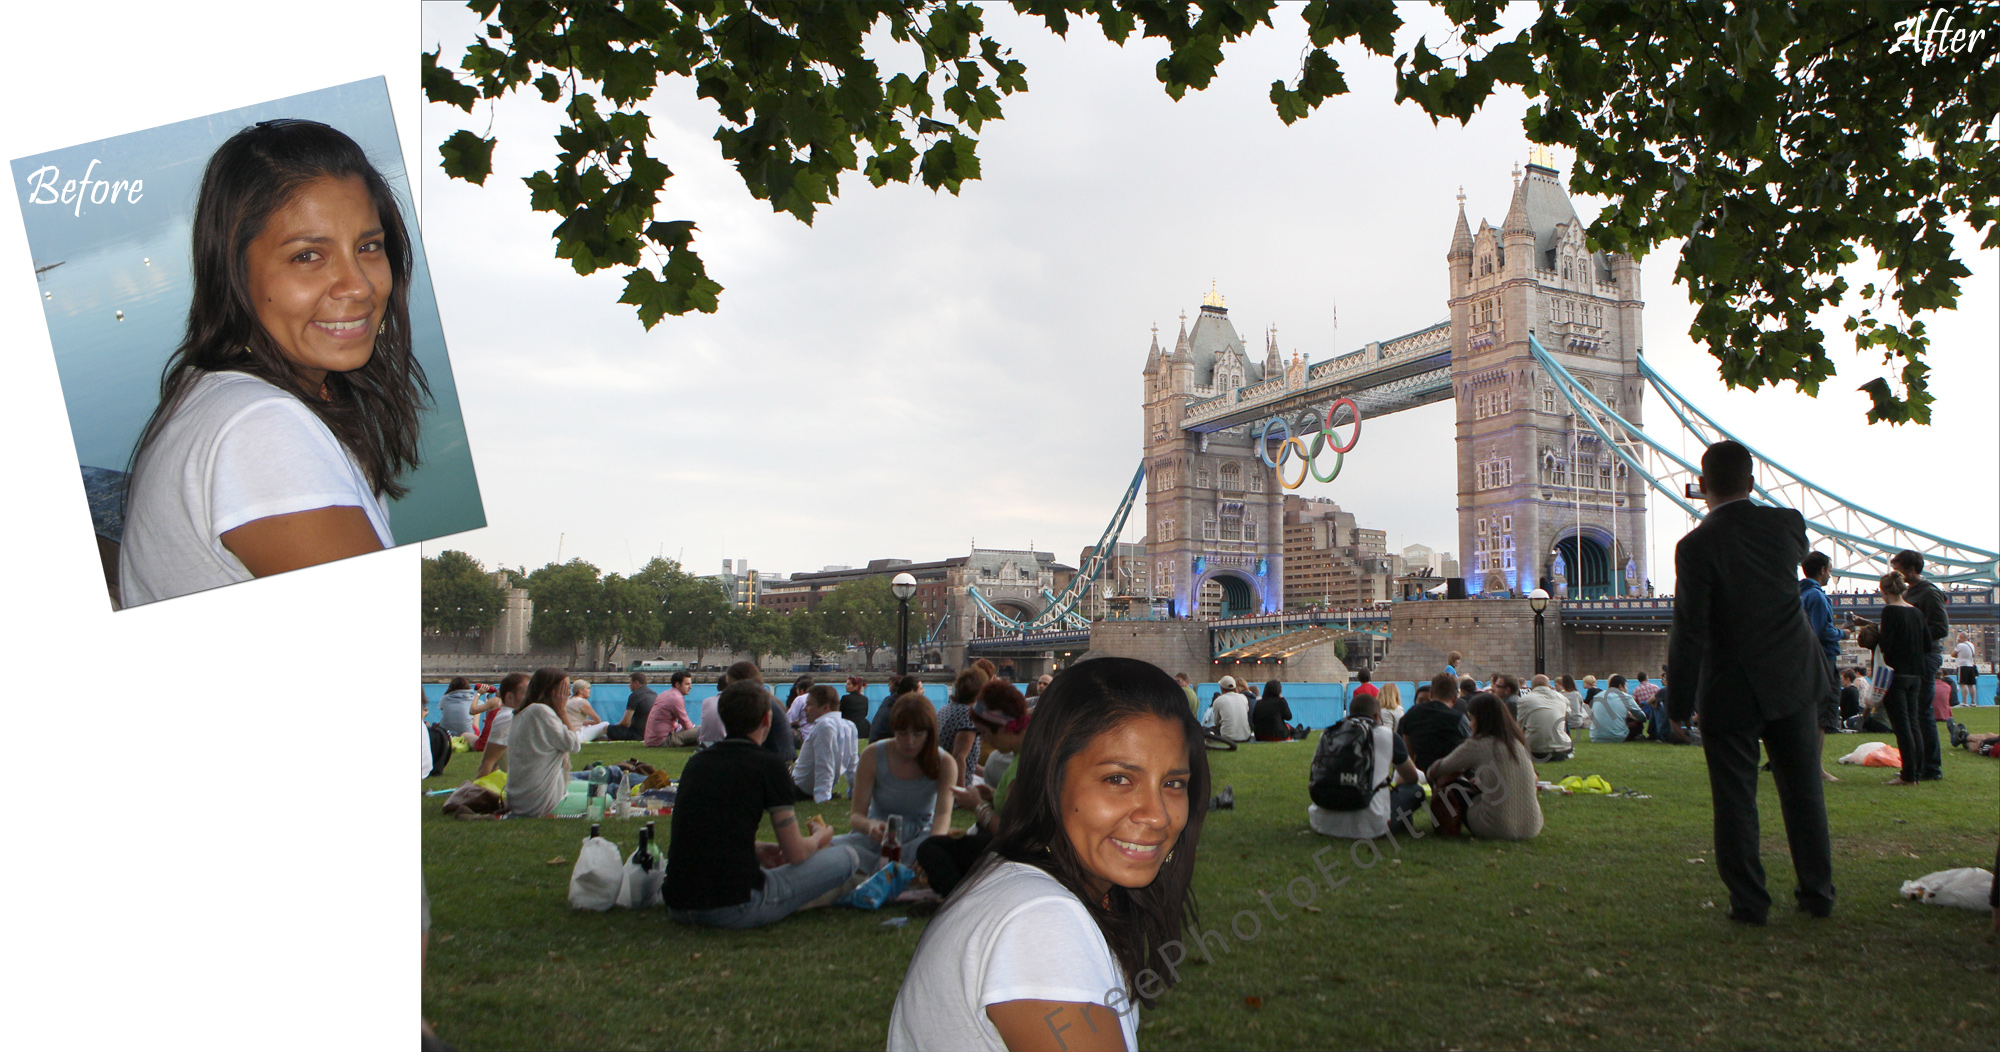 Photo editing: Change photo background to London Bridge during Olympics 2012